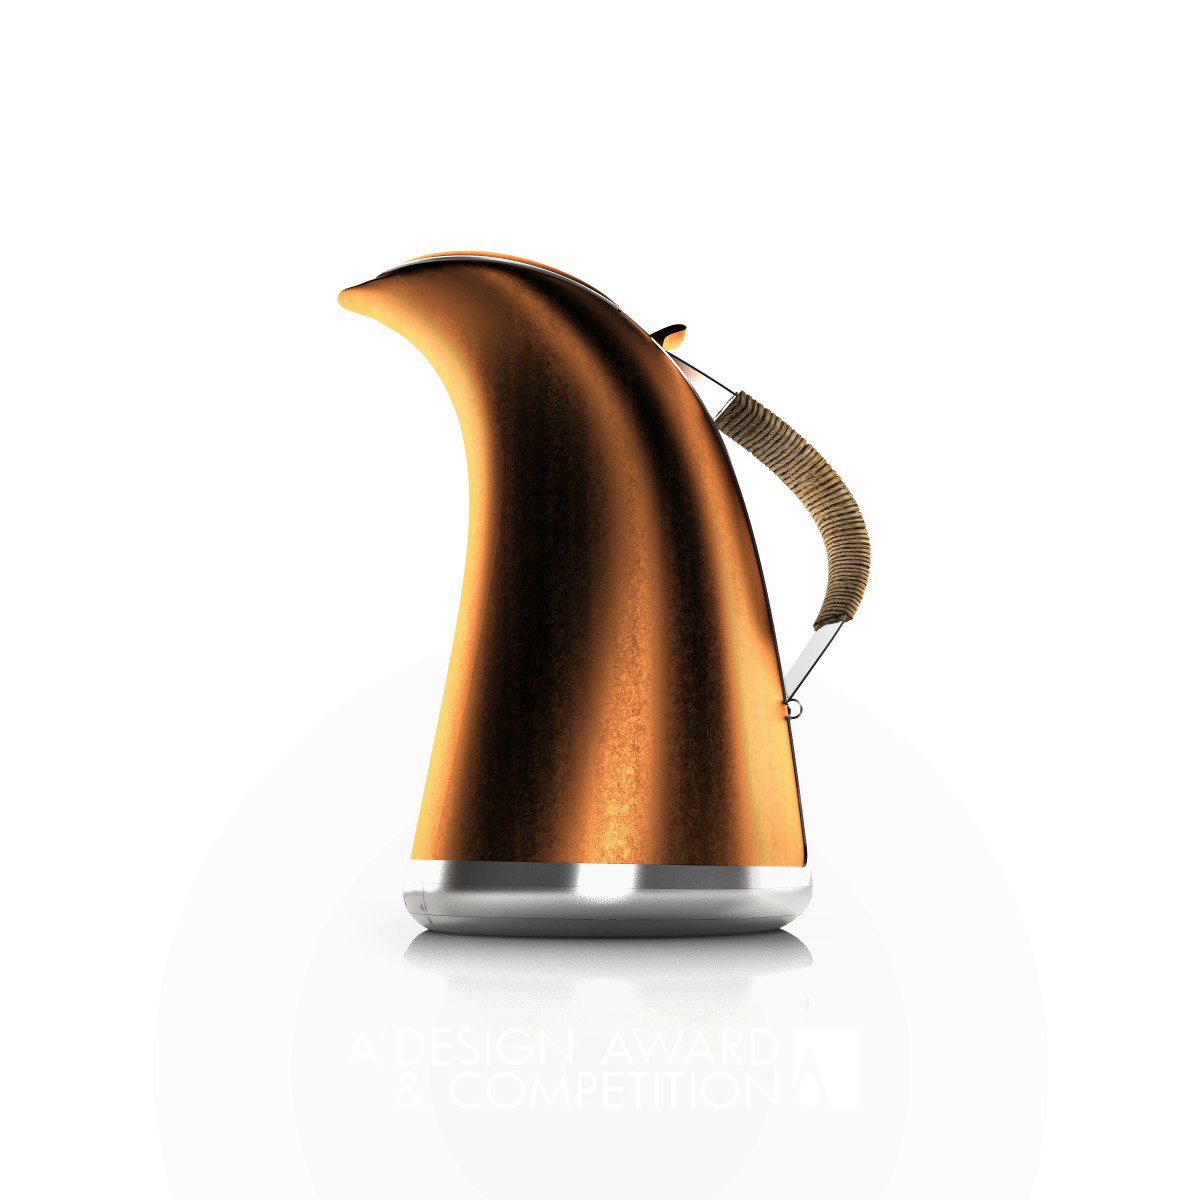 Flame Stovetop Kettle by Hakan Gürsu Silver Bakeware, Tableware, Drinkware and Cookware Design Award Winner 2013 